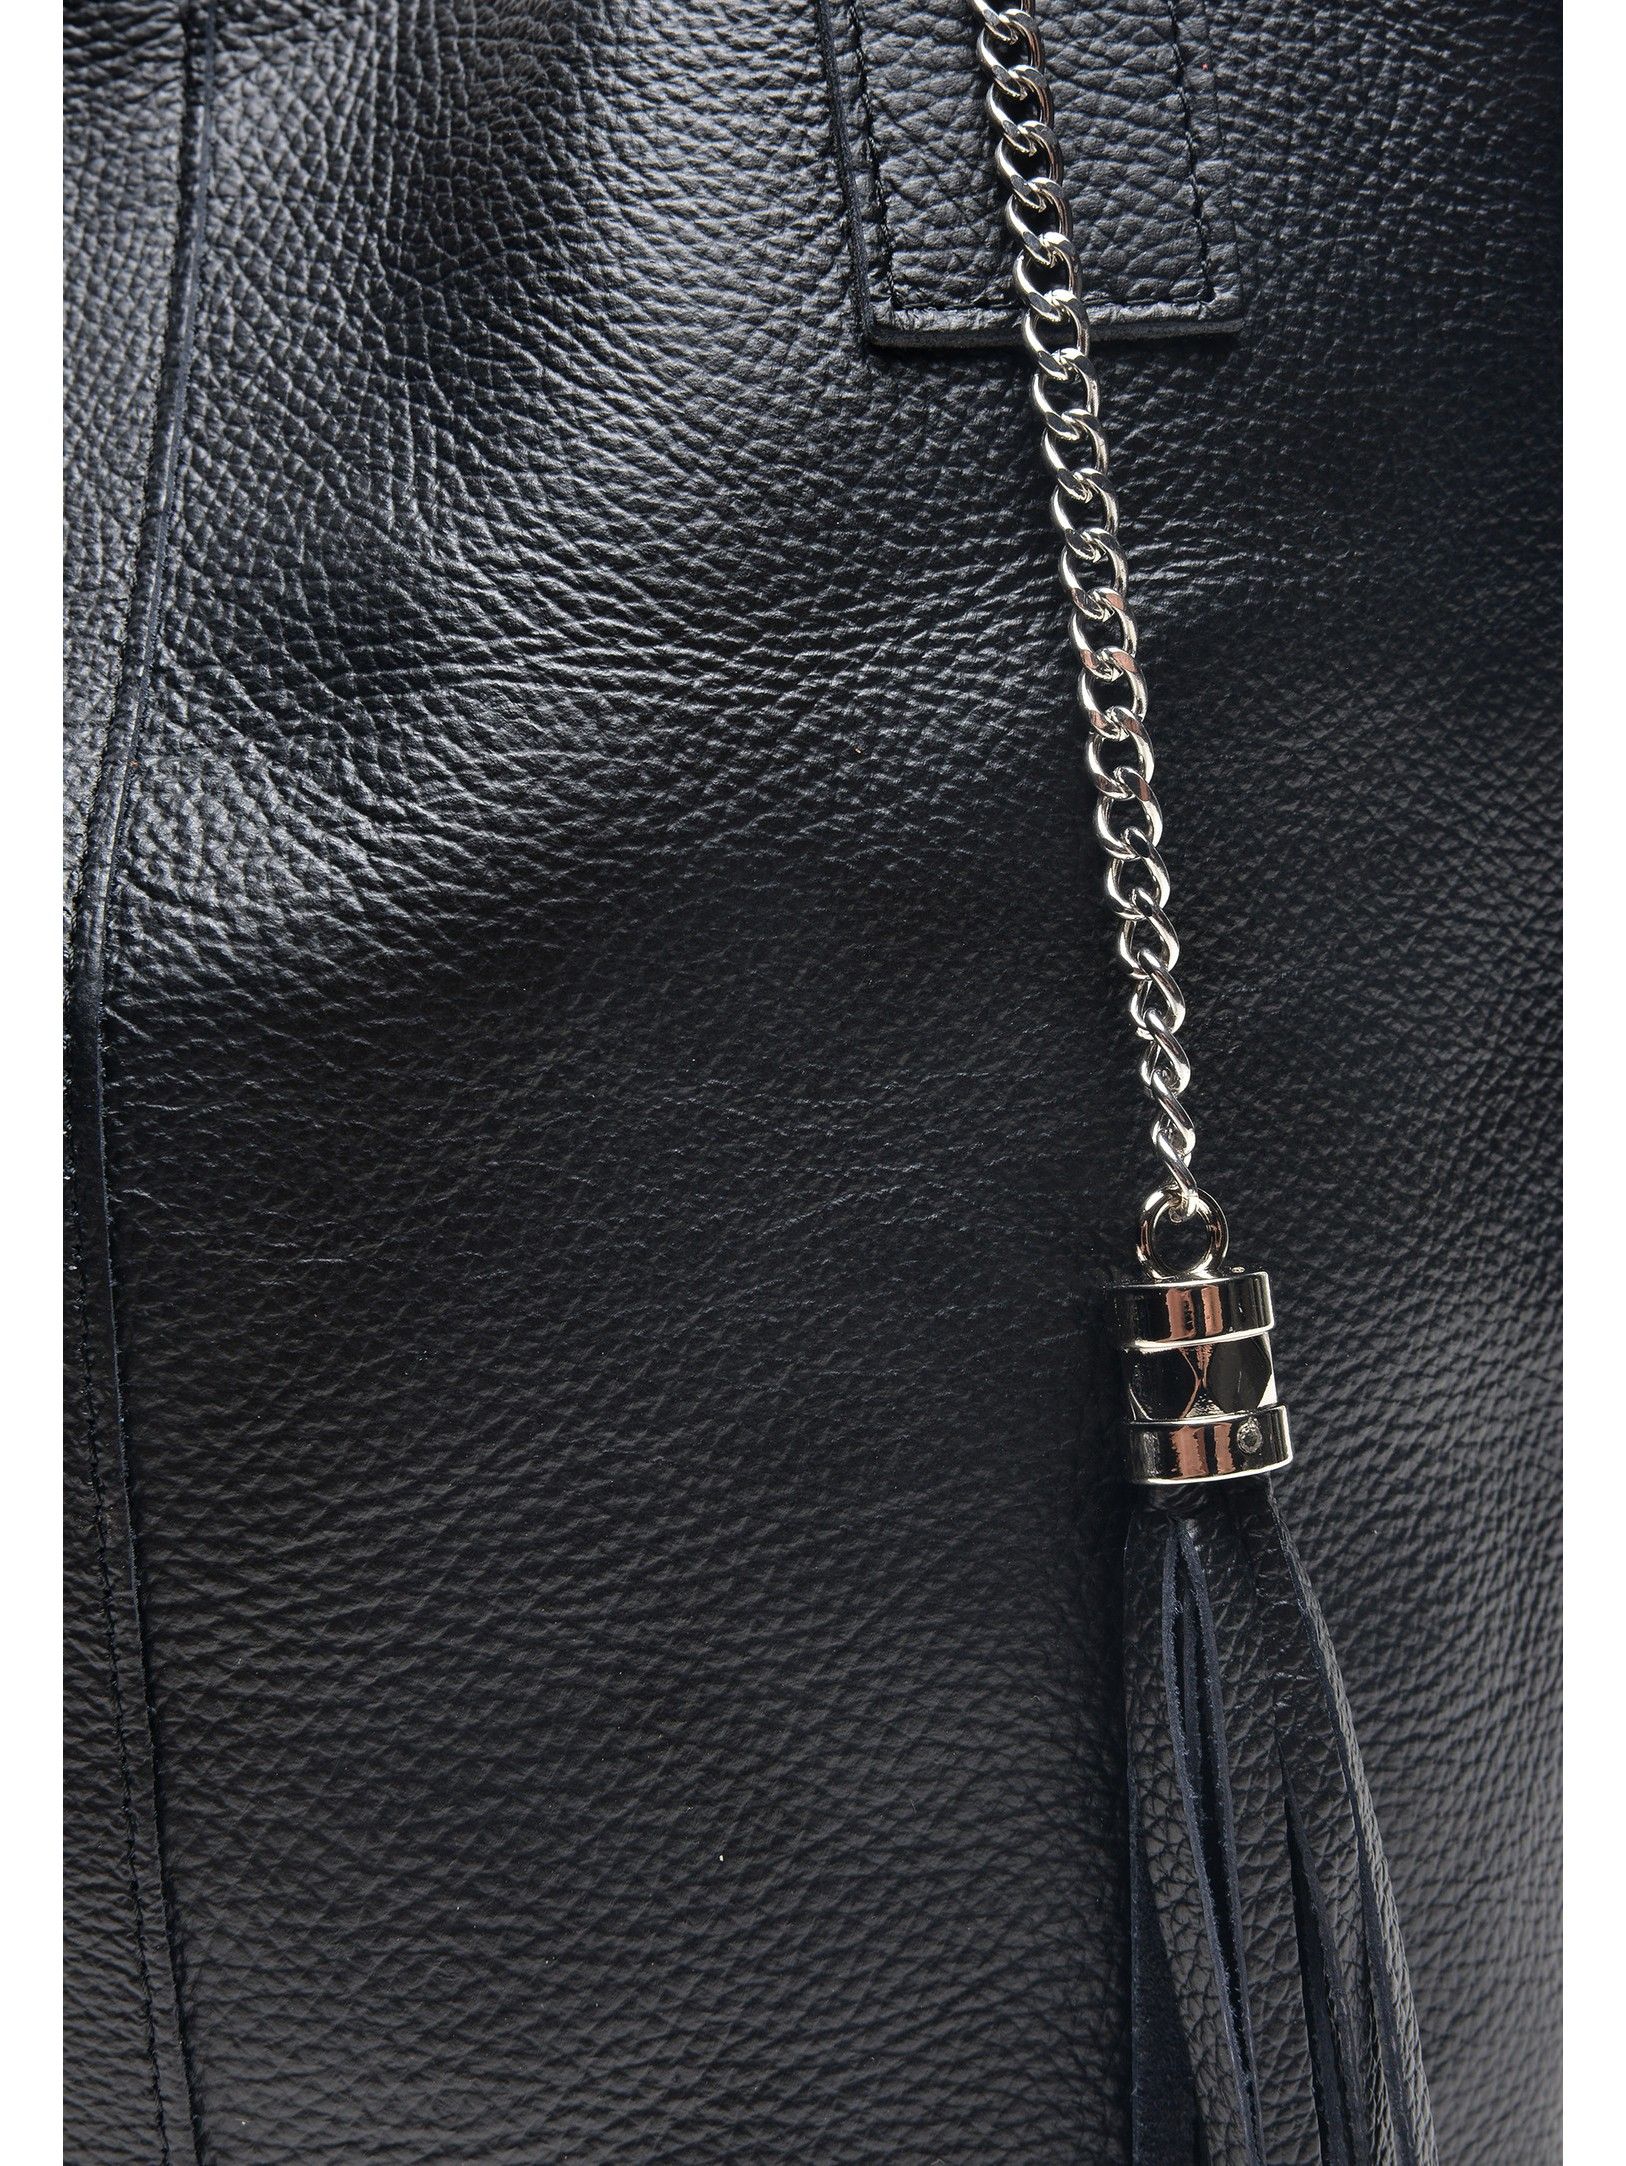 Tote Bag
100% cow leather
Magnetic clasp closure
Inner coin purse
Tassel detail
Dimensions (L): 36x41x15 cm
Handle: 54 cm non adjustable
Shoulder strap: / cm adjustable